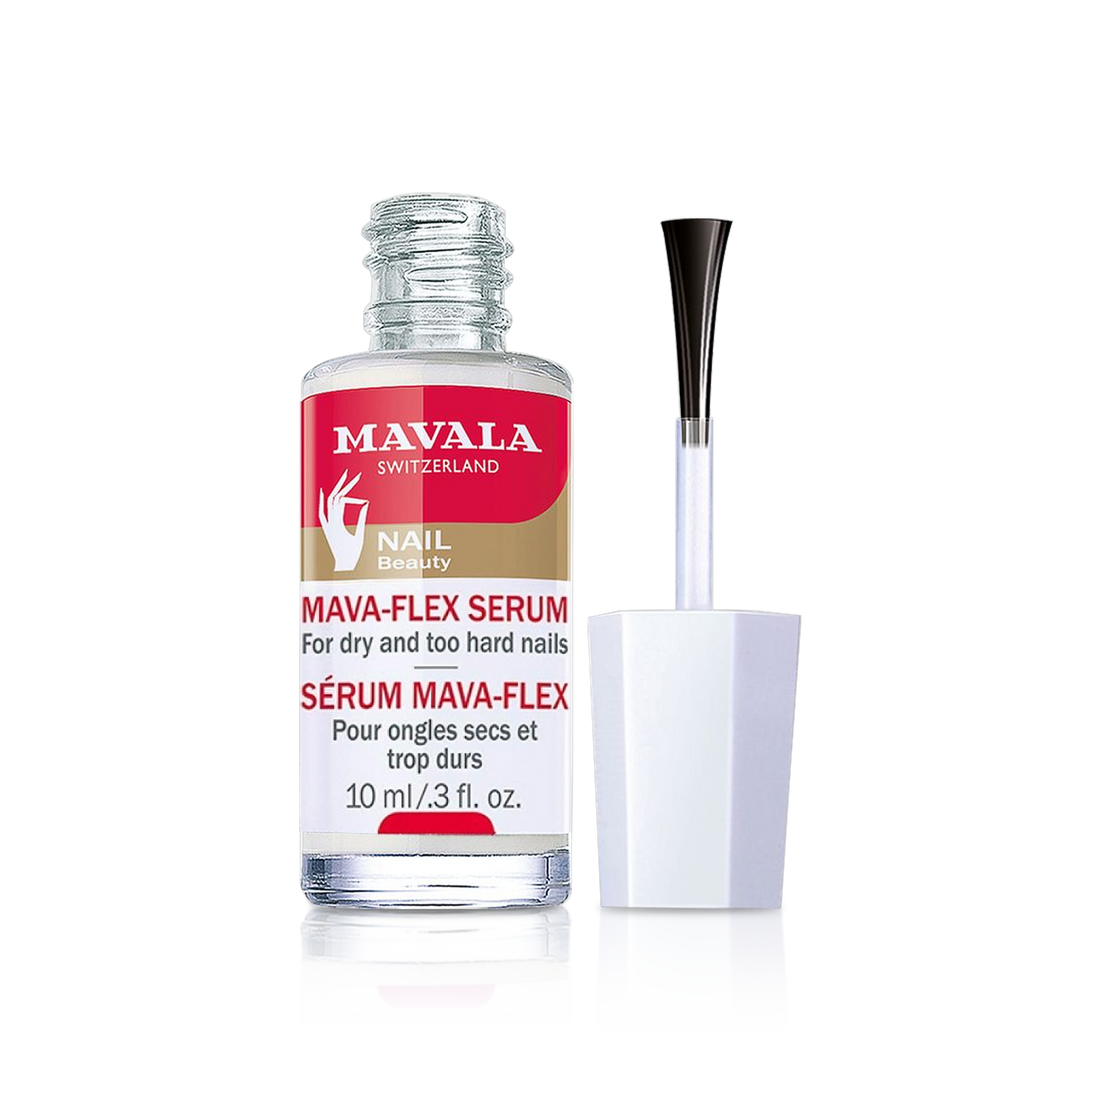 Mava-Flex Serum For Dry And Too Hard Nails